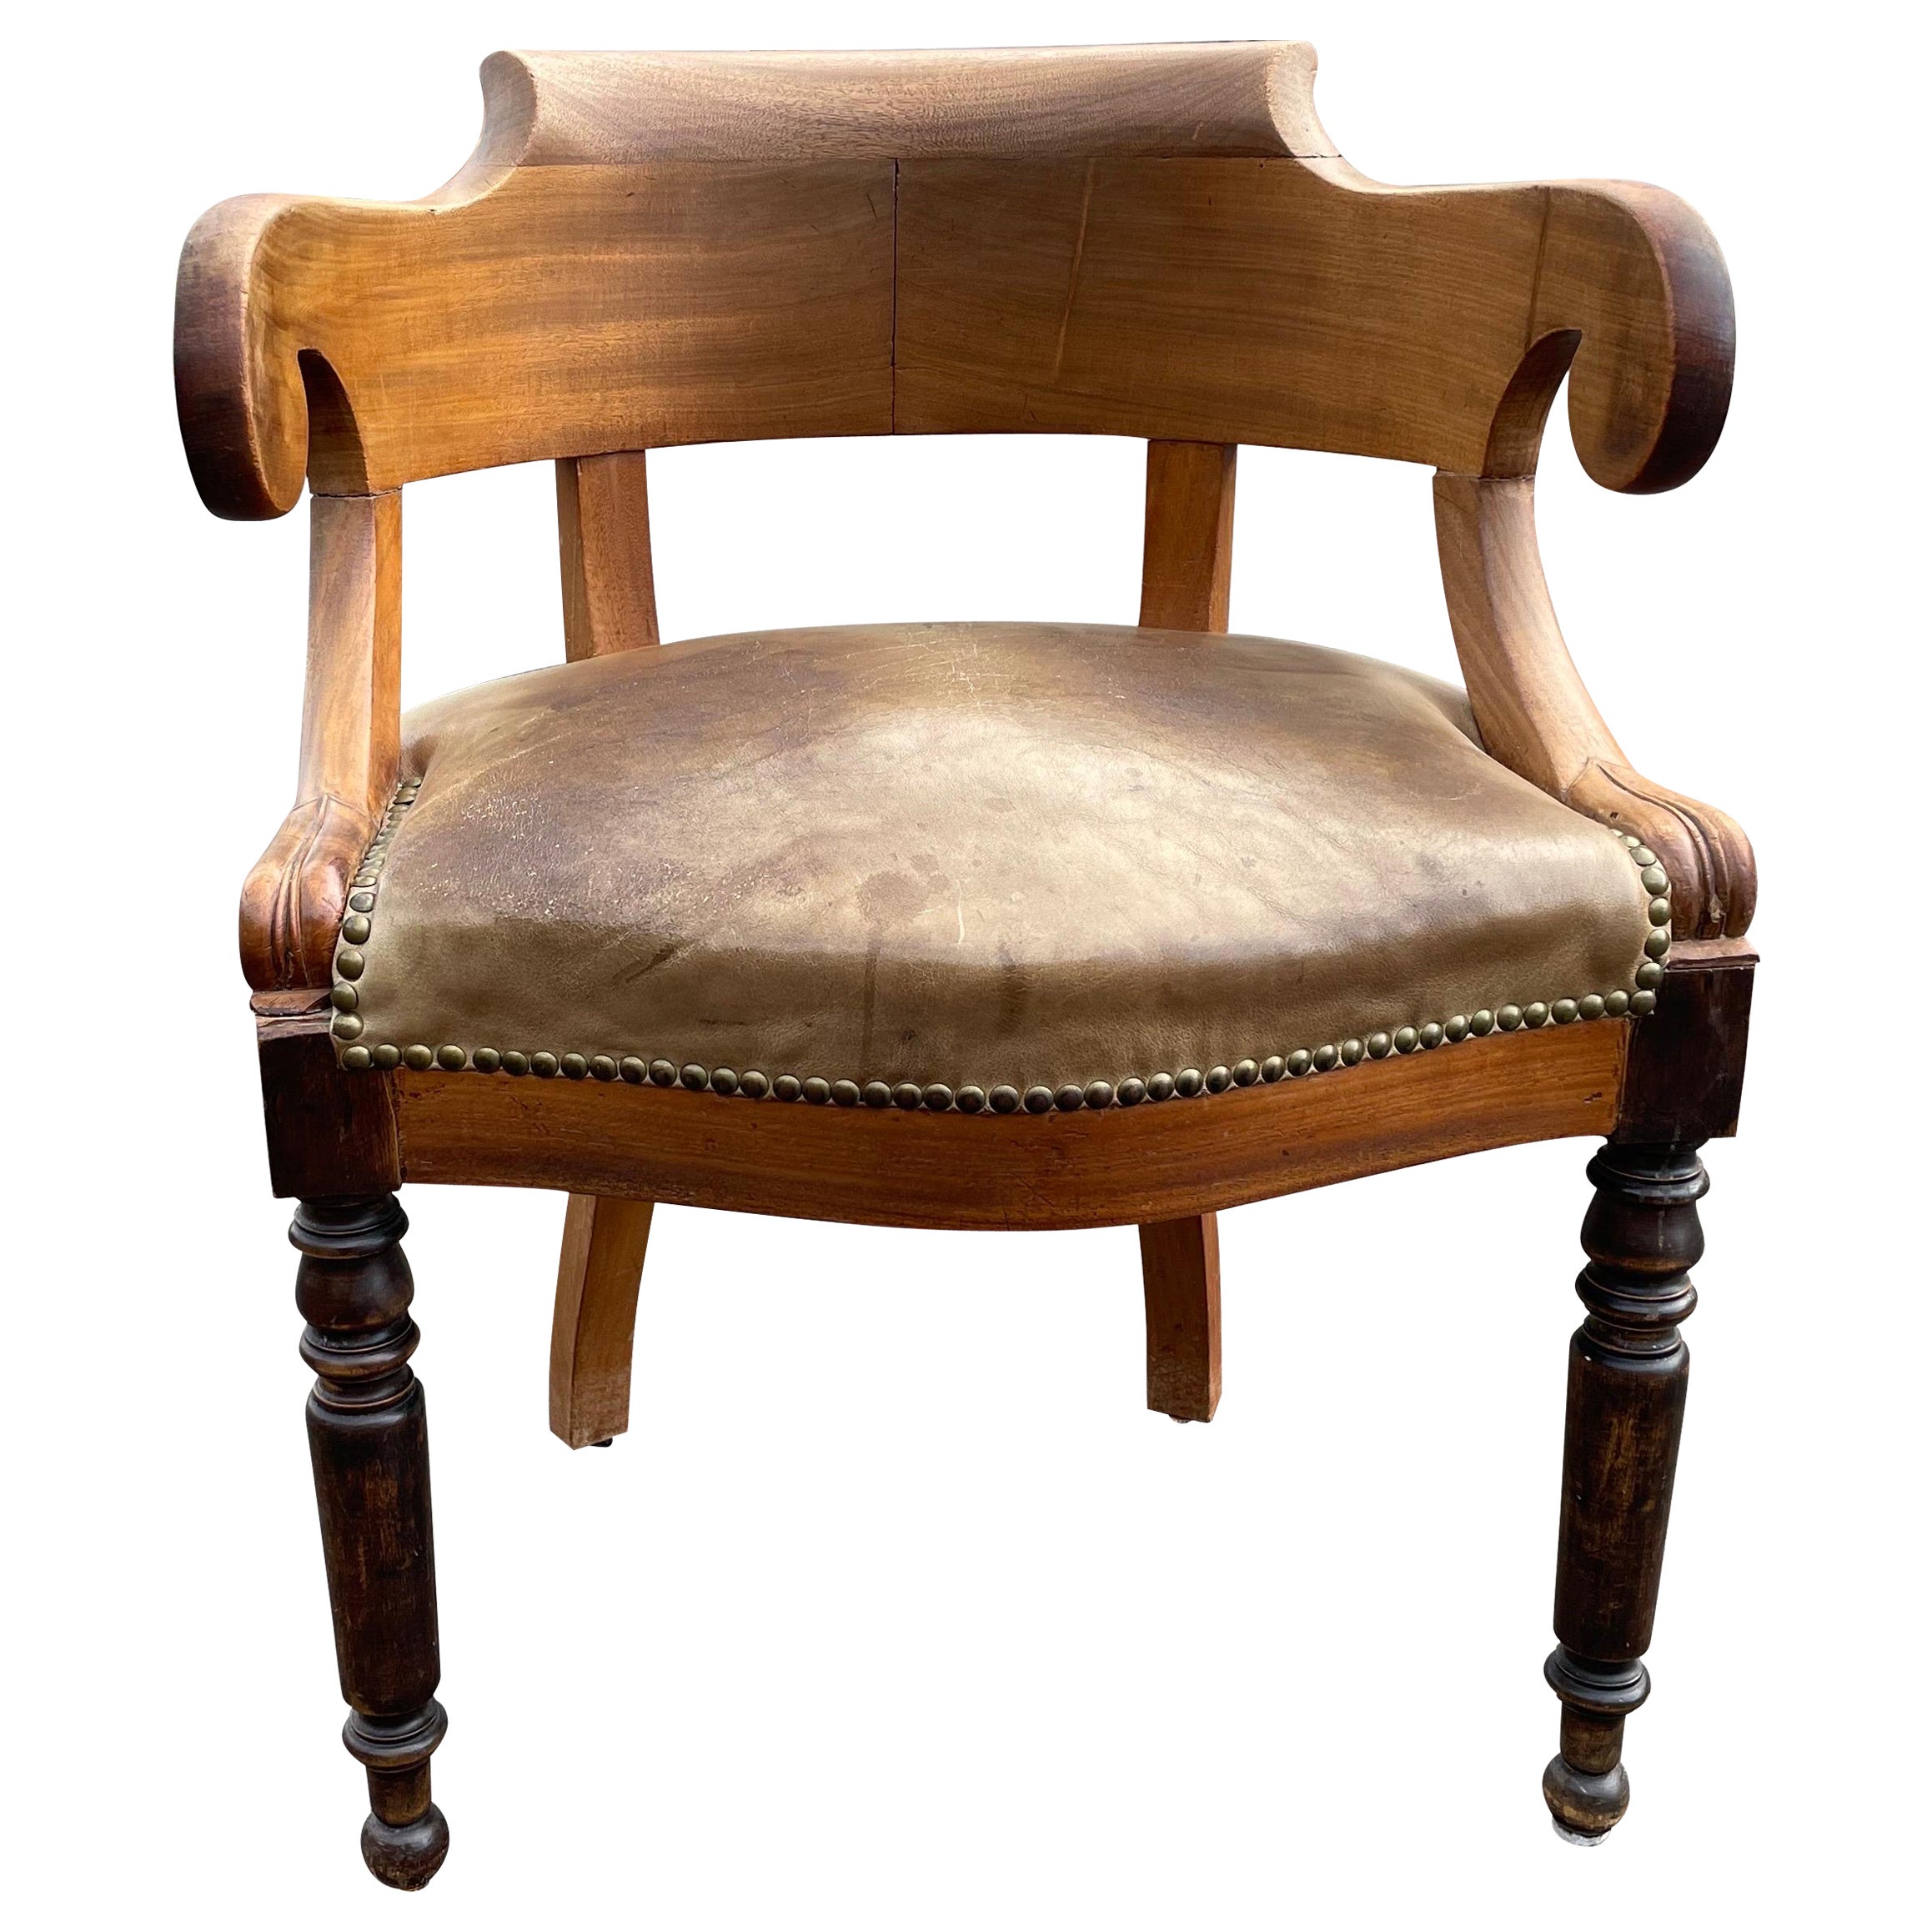 Massiv antiker Sessel im Louis-Philippe-Stil des 19. Jahrhunderts